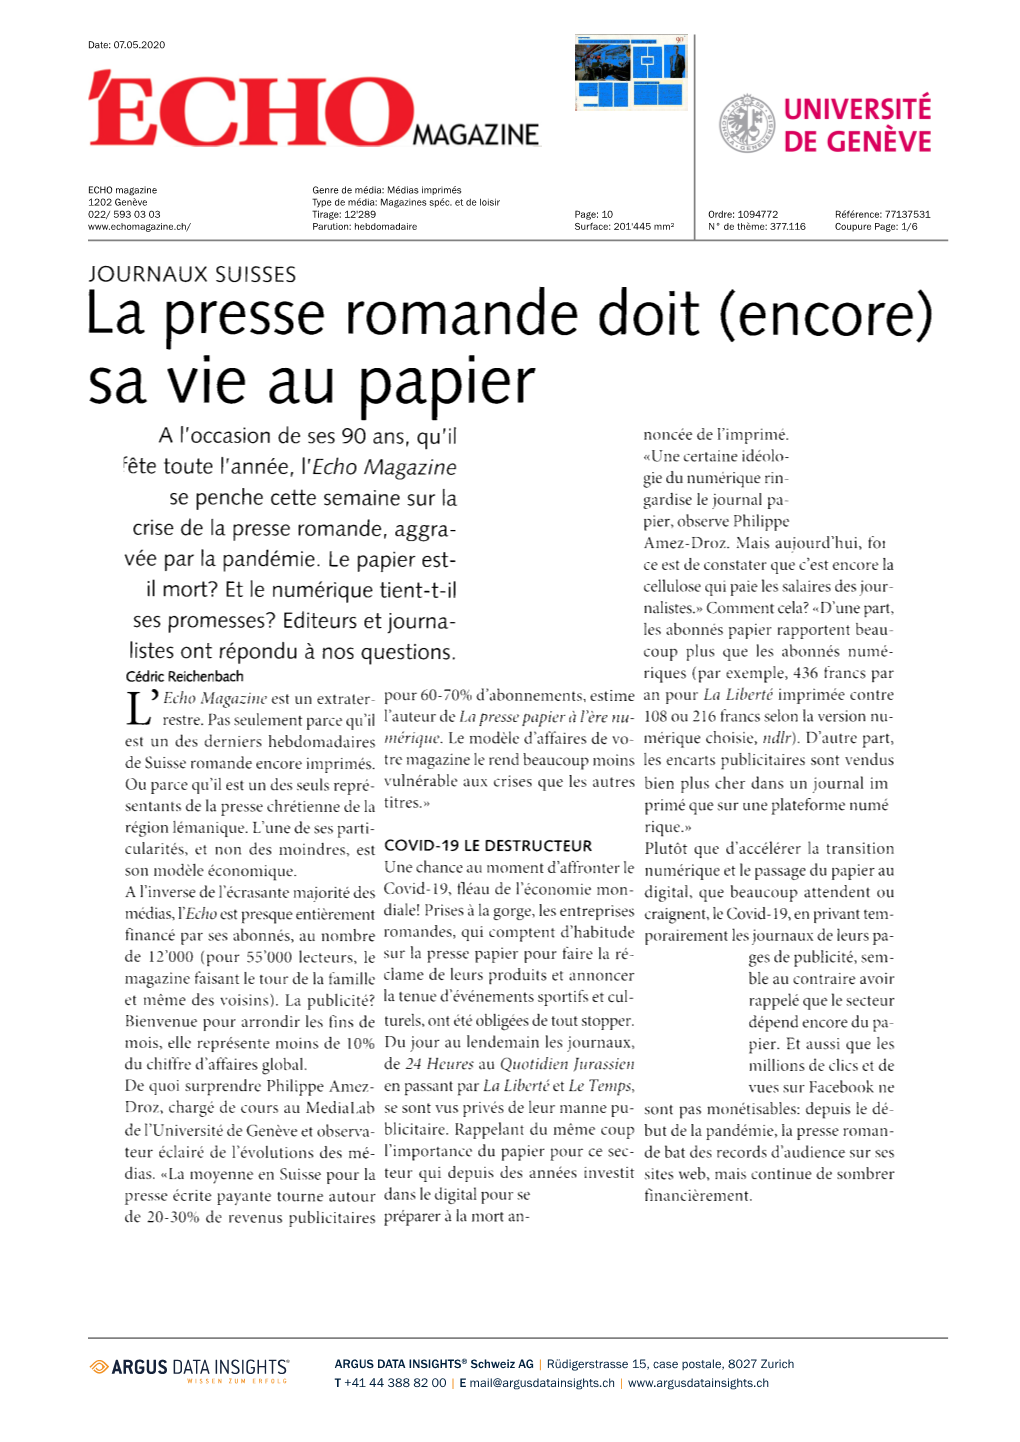 La Presse Romande Doit (Encore) Sa Vie Au Papier